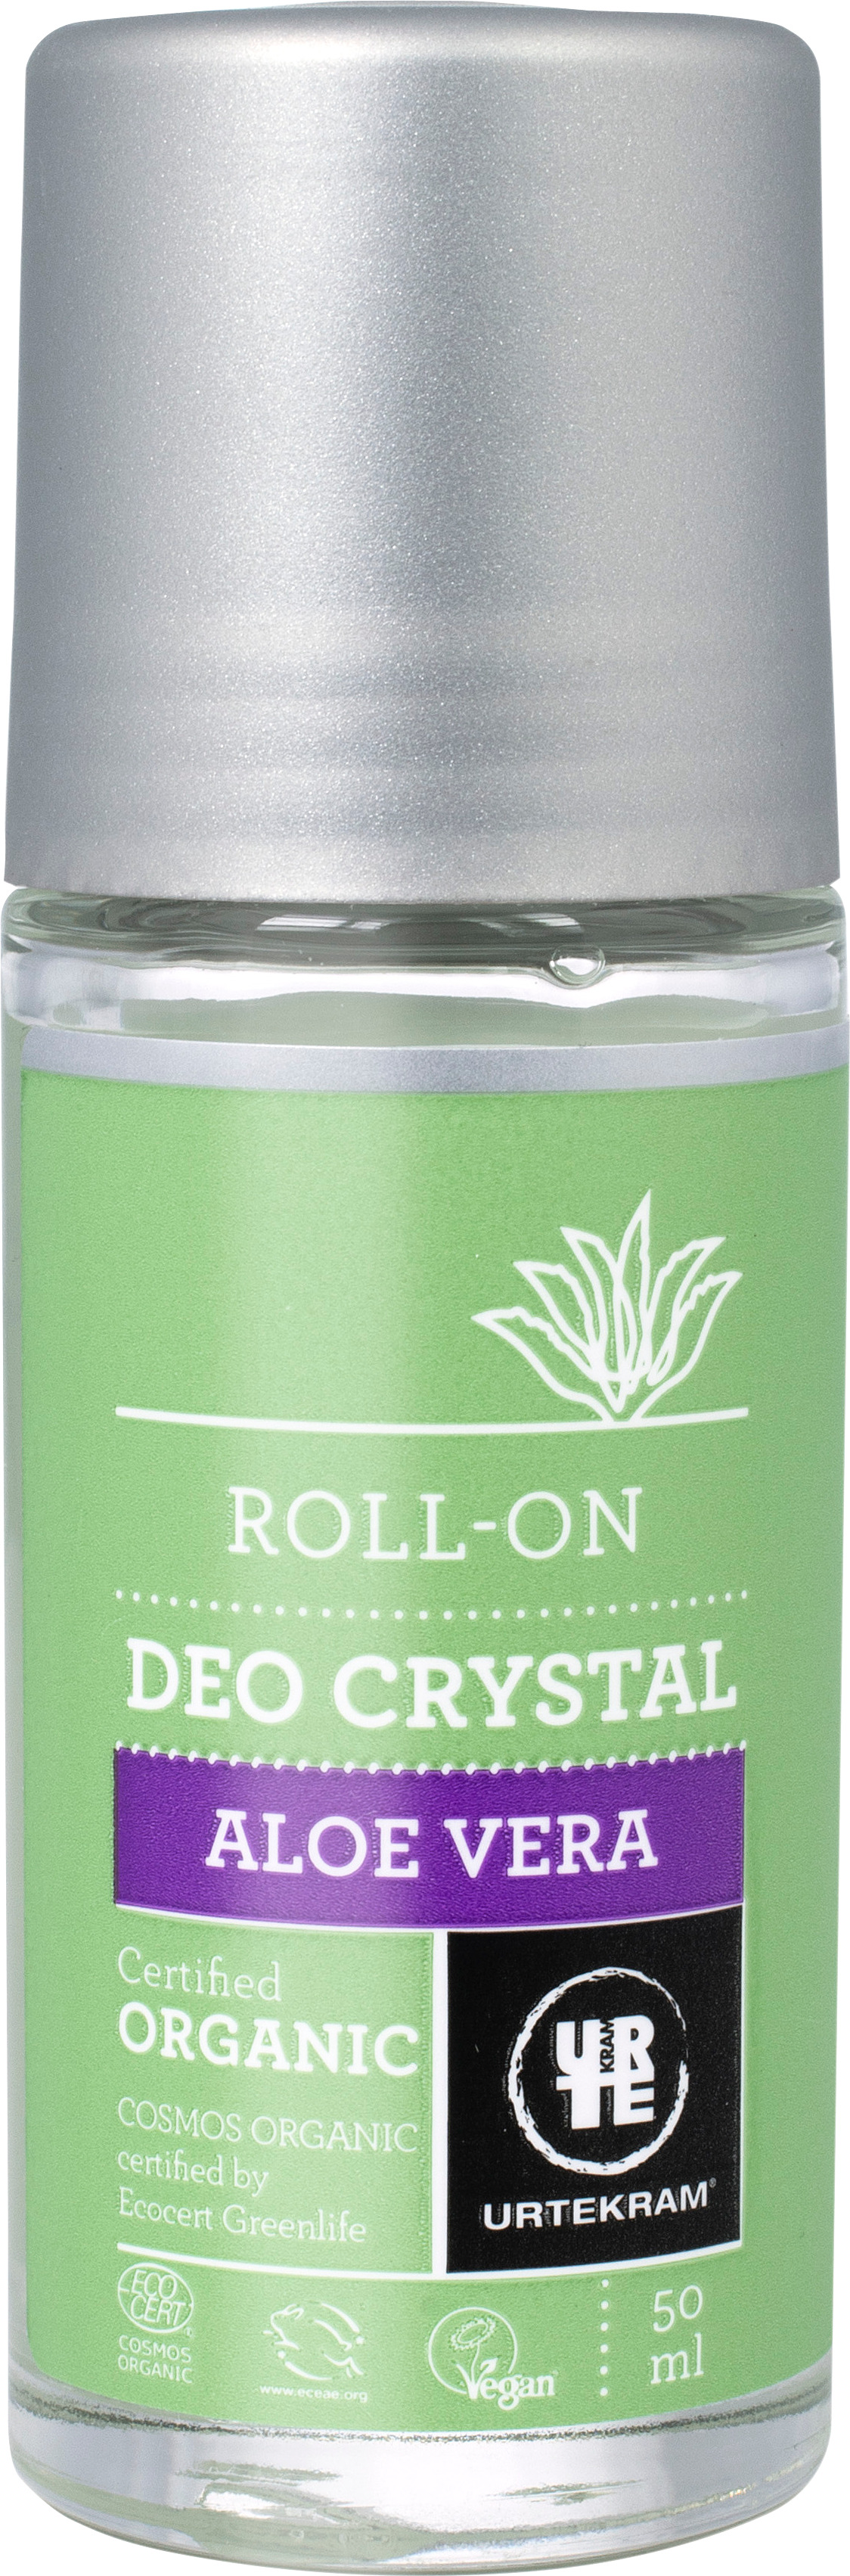 Urtekram Aloe Vera Deokristall Roll-On 50 ml